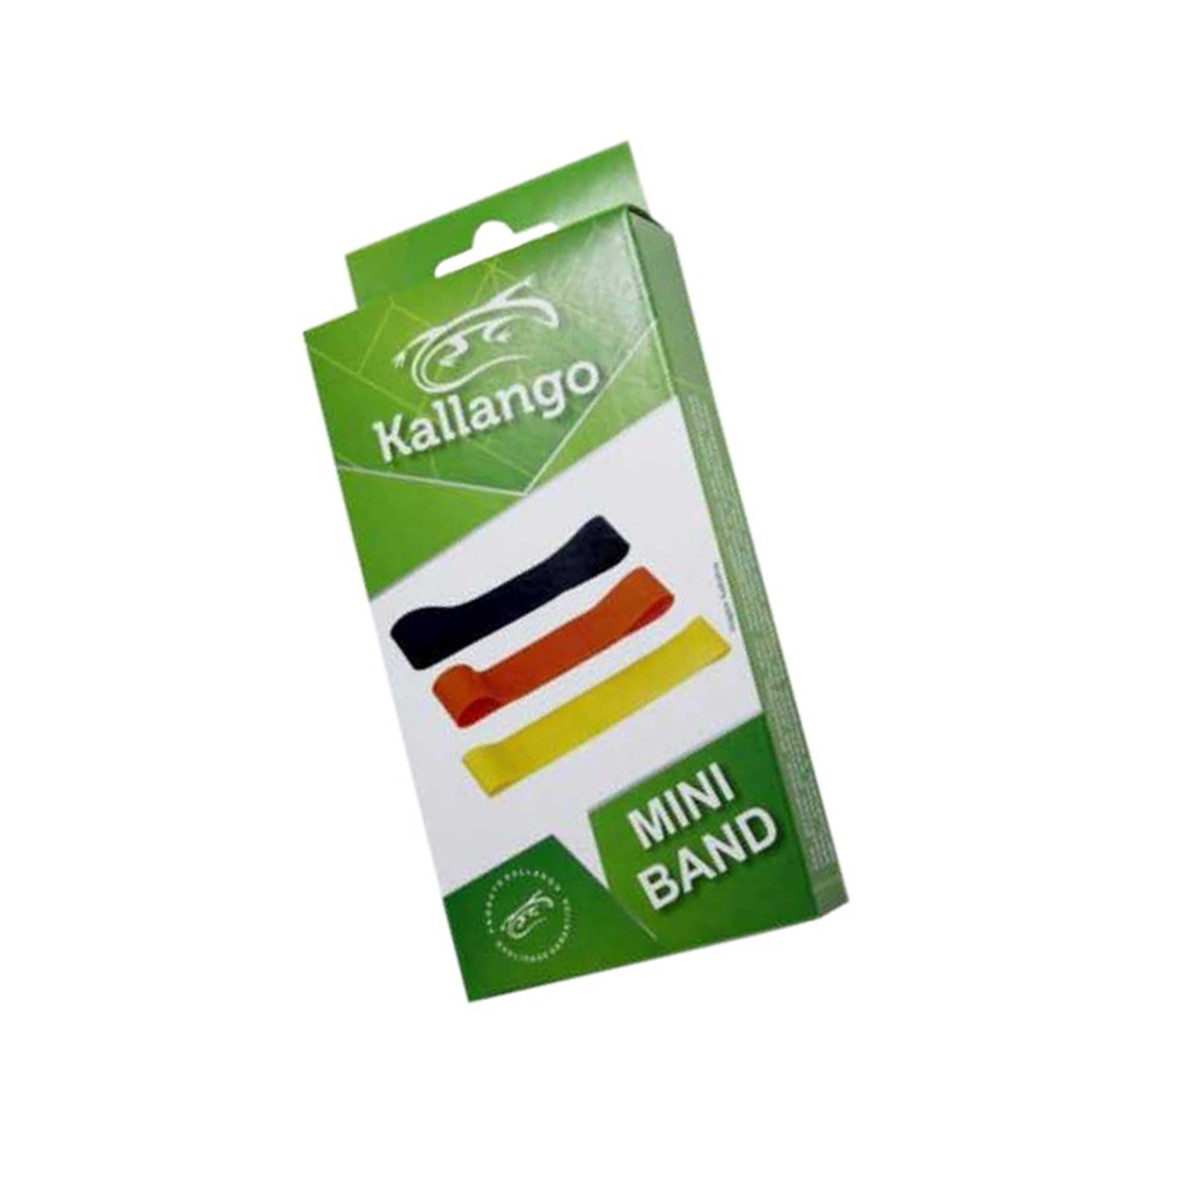 Foto do produto Kit 3 Mini Bands Kallango Fit Basic Intensidades  Leve/Médio/Forte